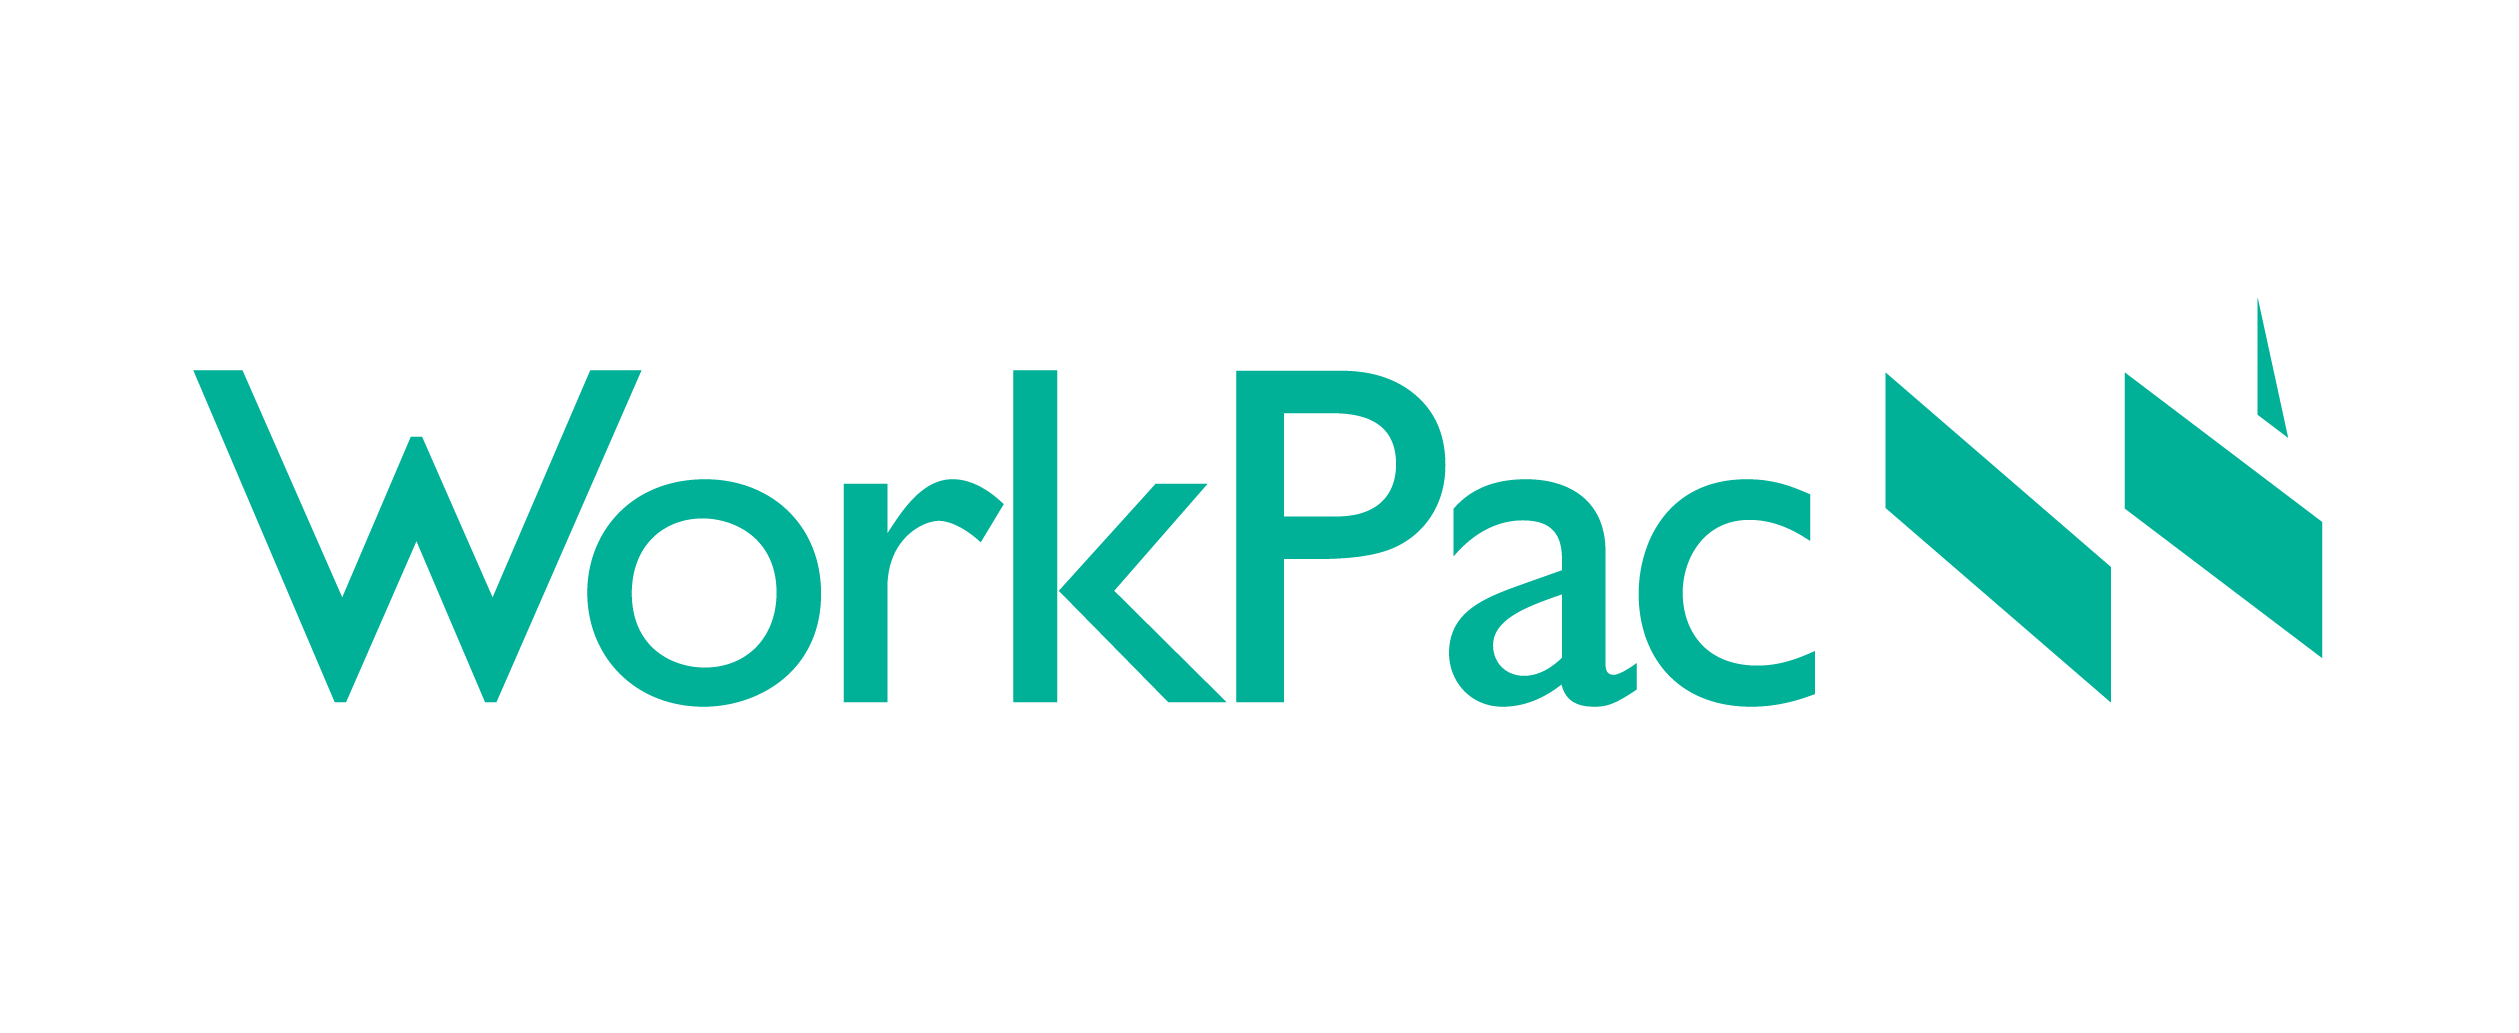 Workpac logo